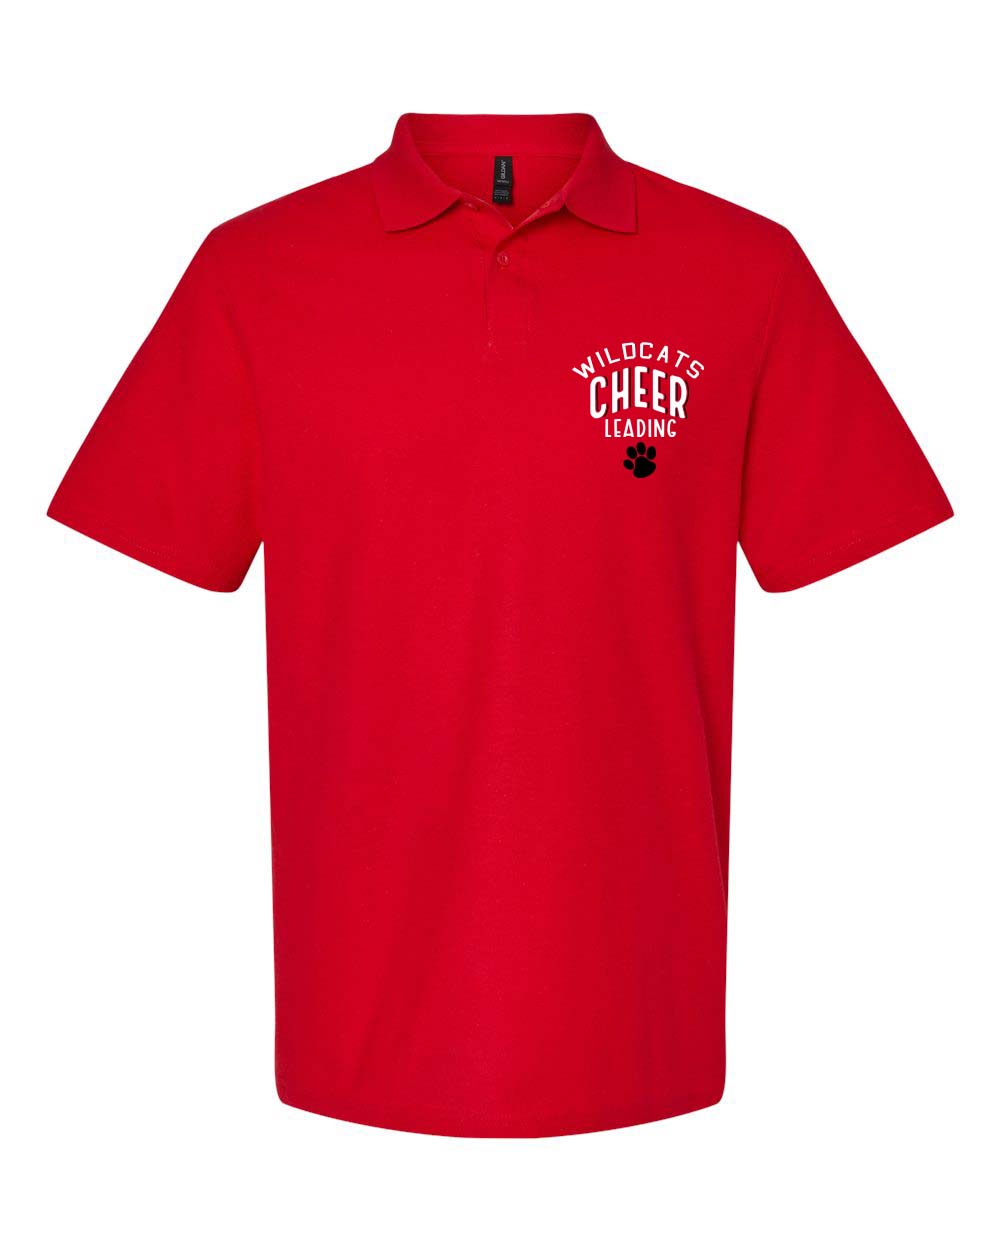 Wildcats Cheer Design 5 Polo T-Shirt